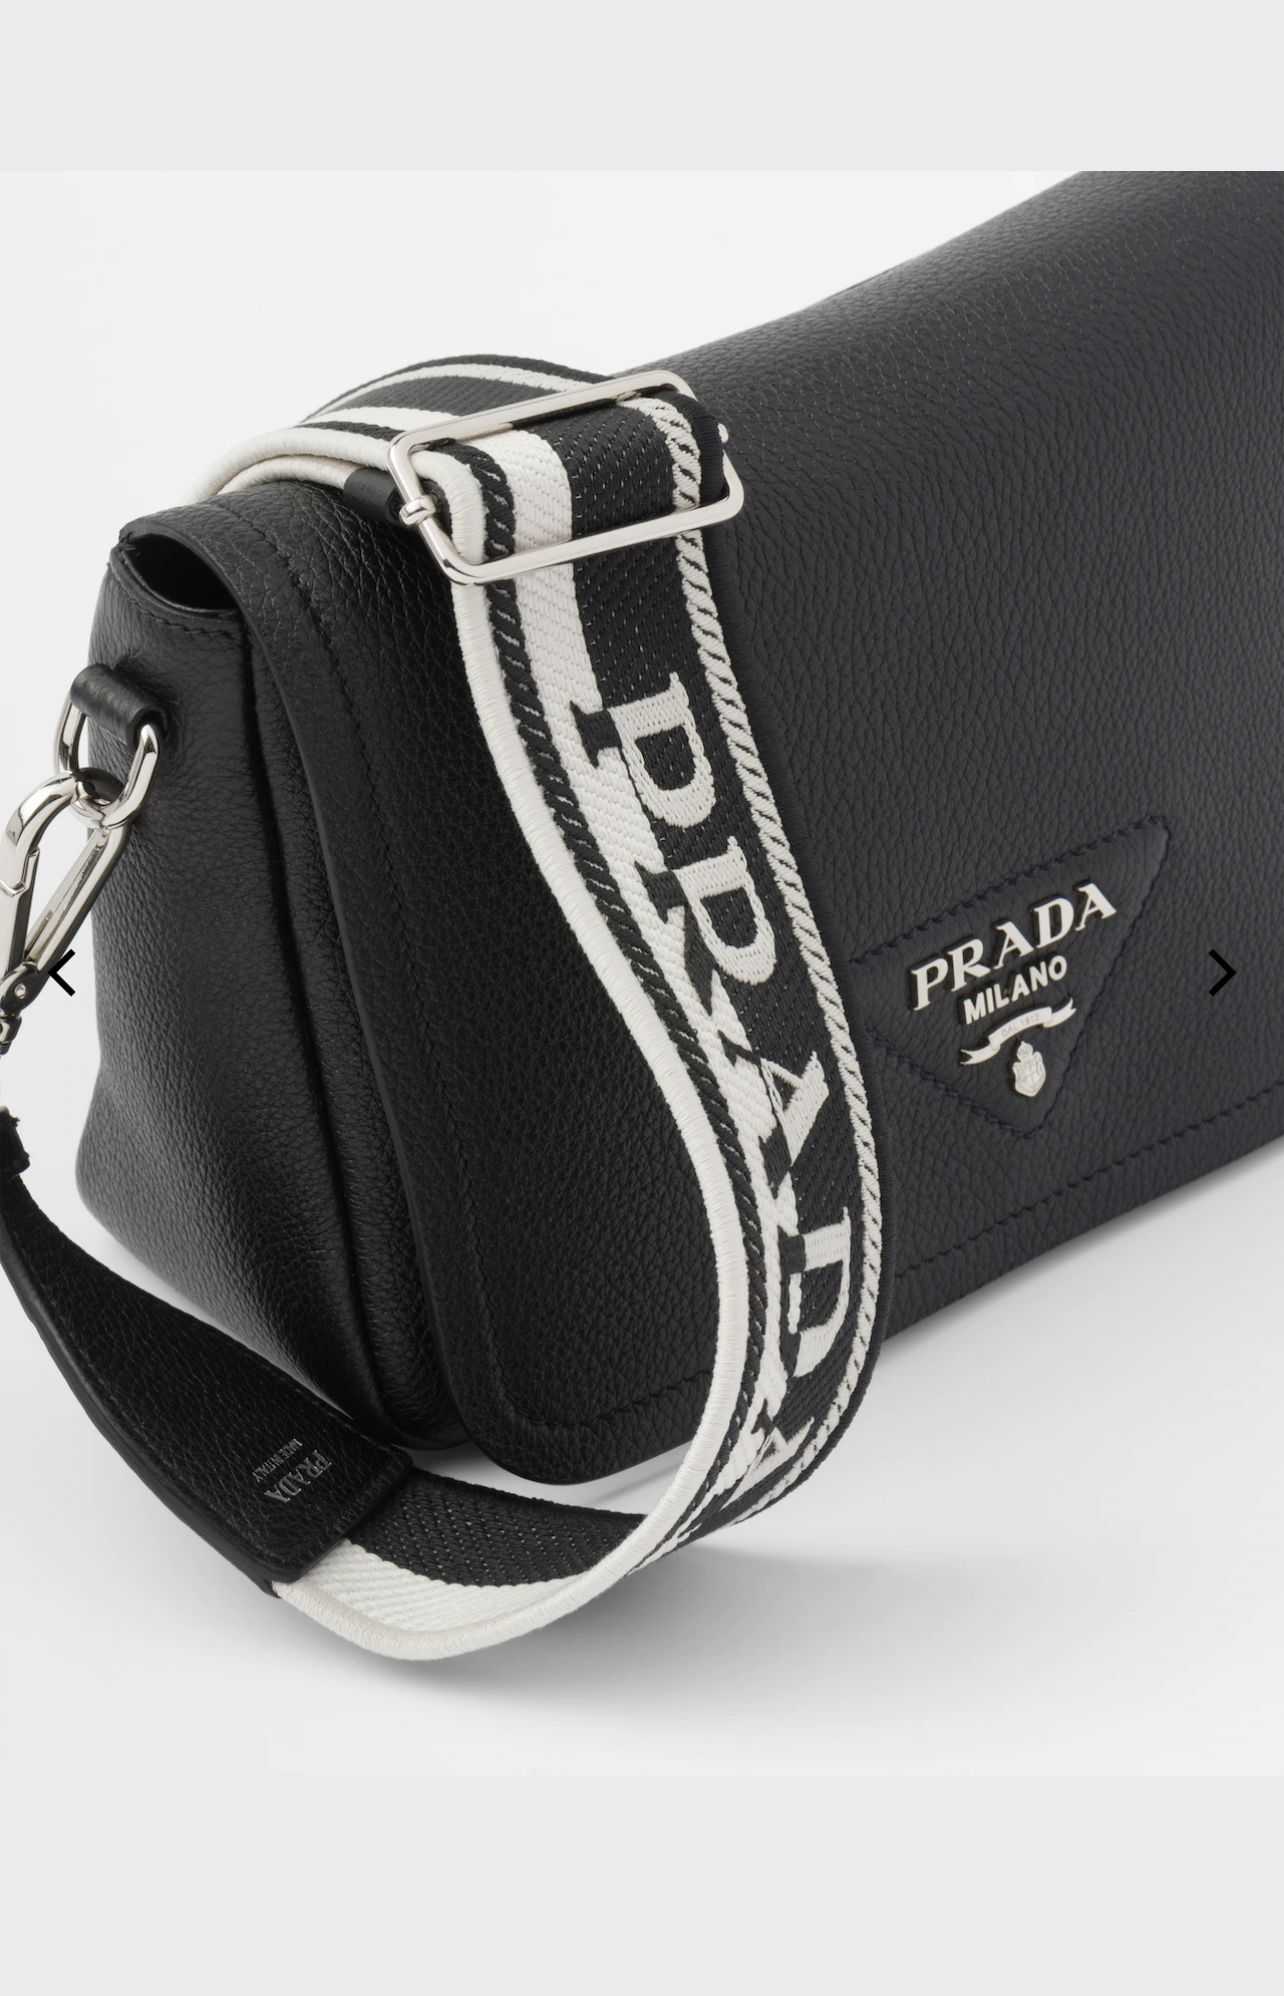 Prada Nylon Duffle Bag XL for Sale in Riverside, CA - OfferUp